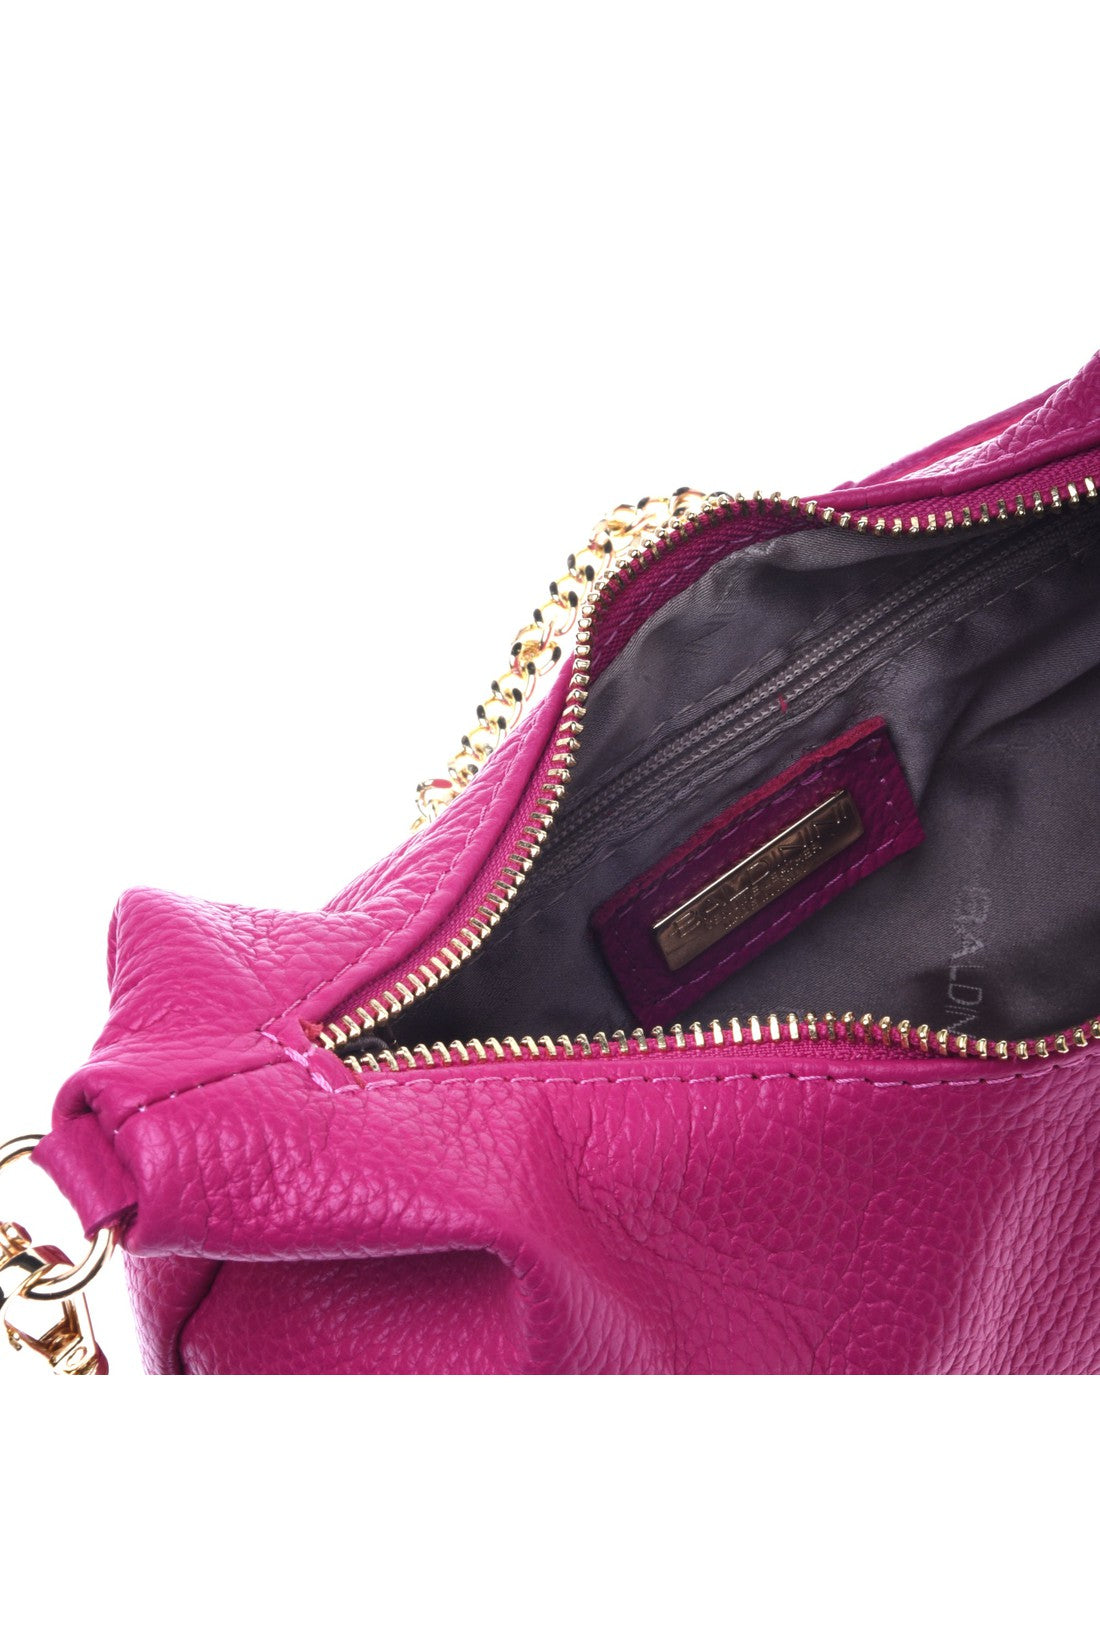 Clutch bag in fuchsia tumbled leather